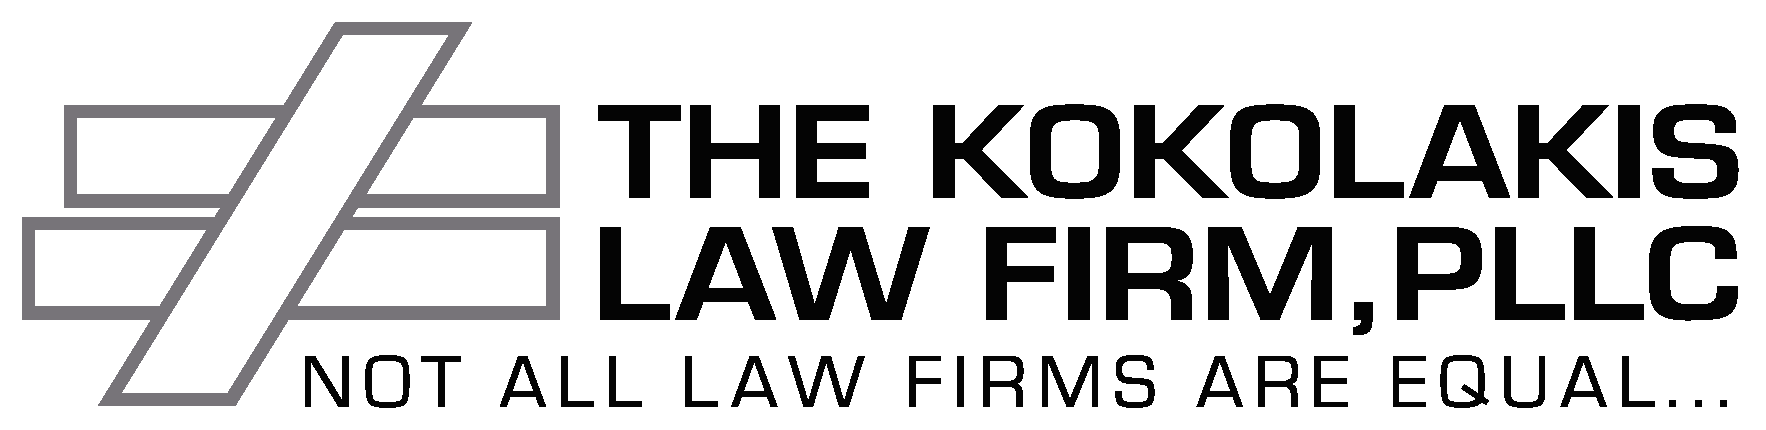 The Kokolakis Law Firm, LLC